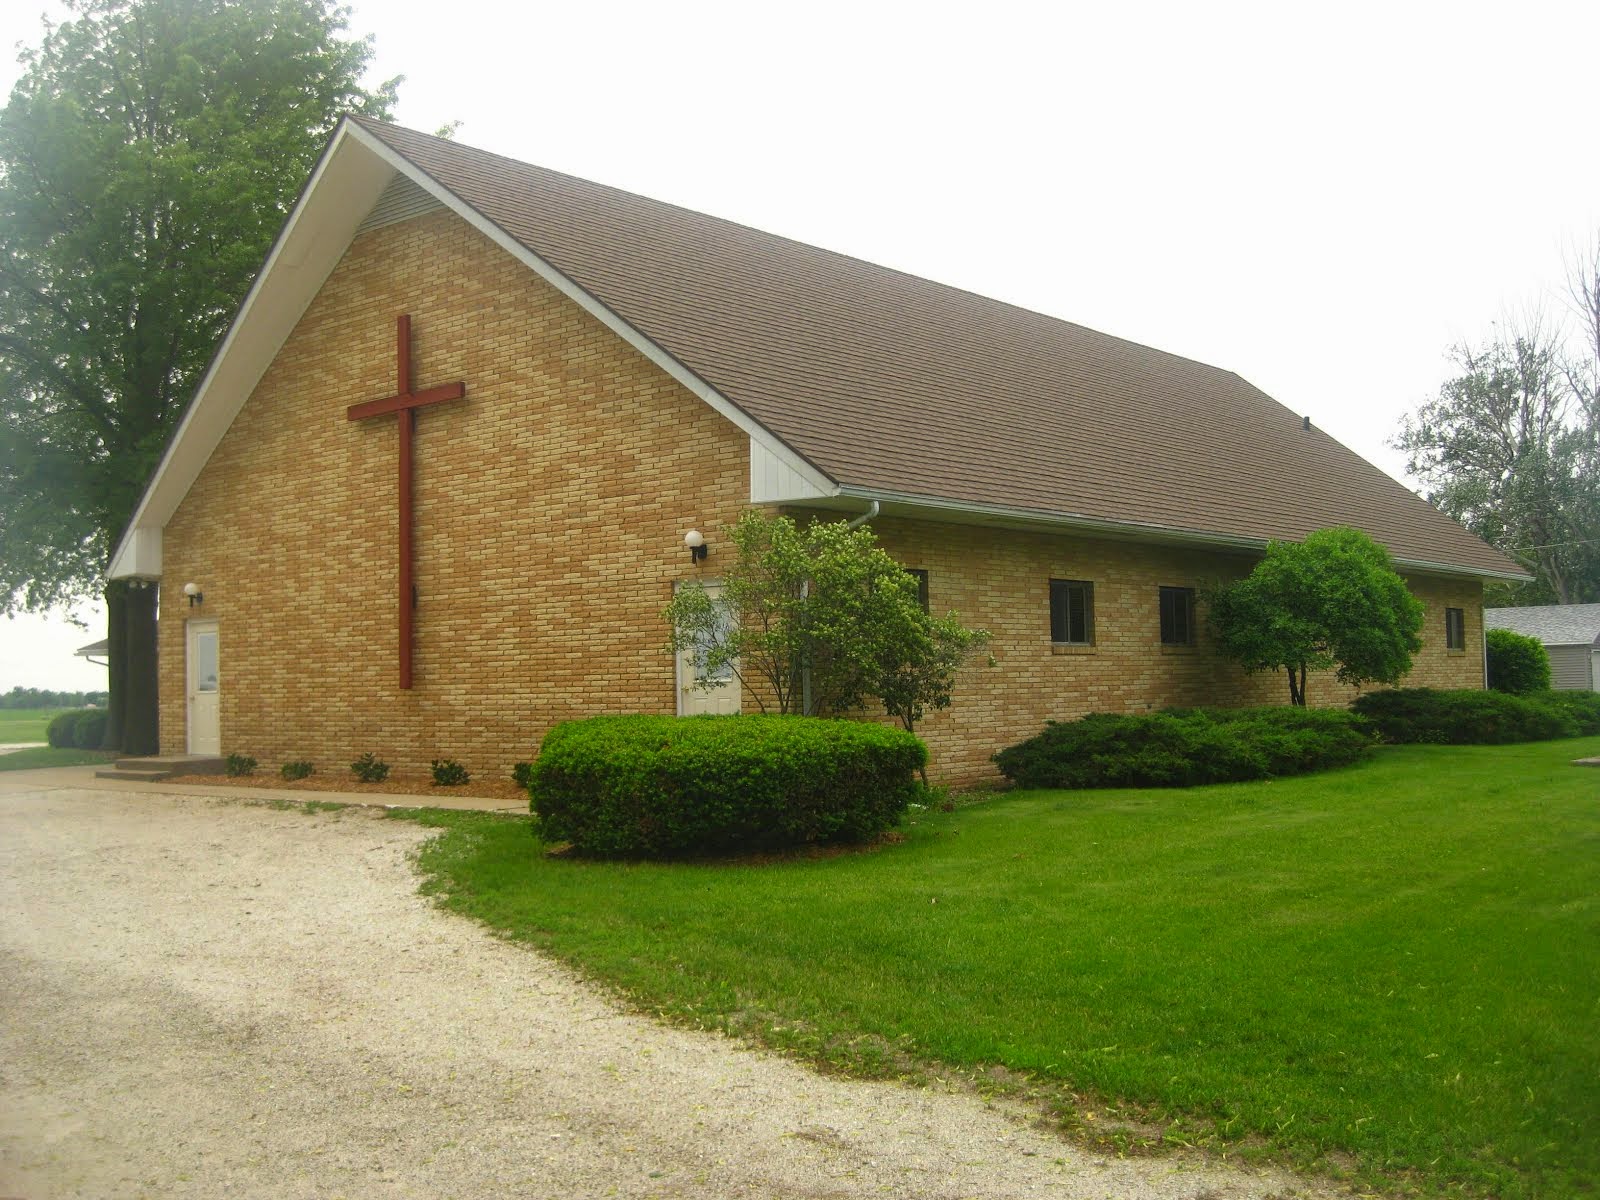 Washington Mennonite Church